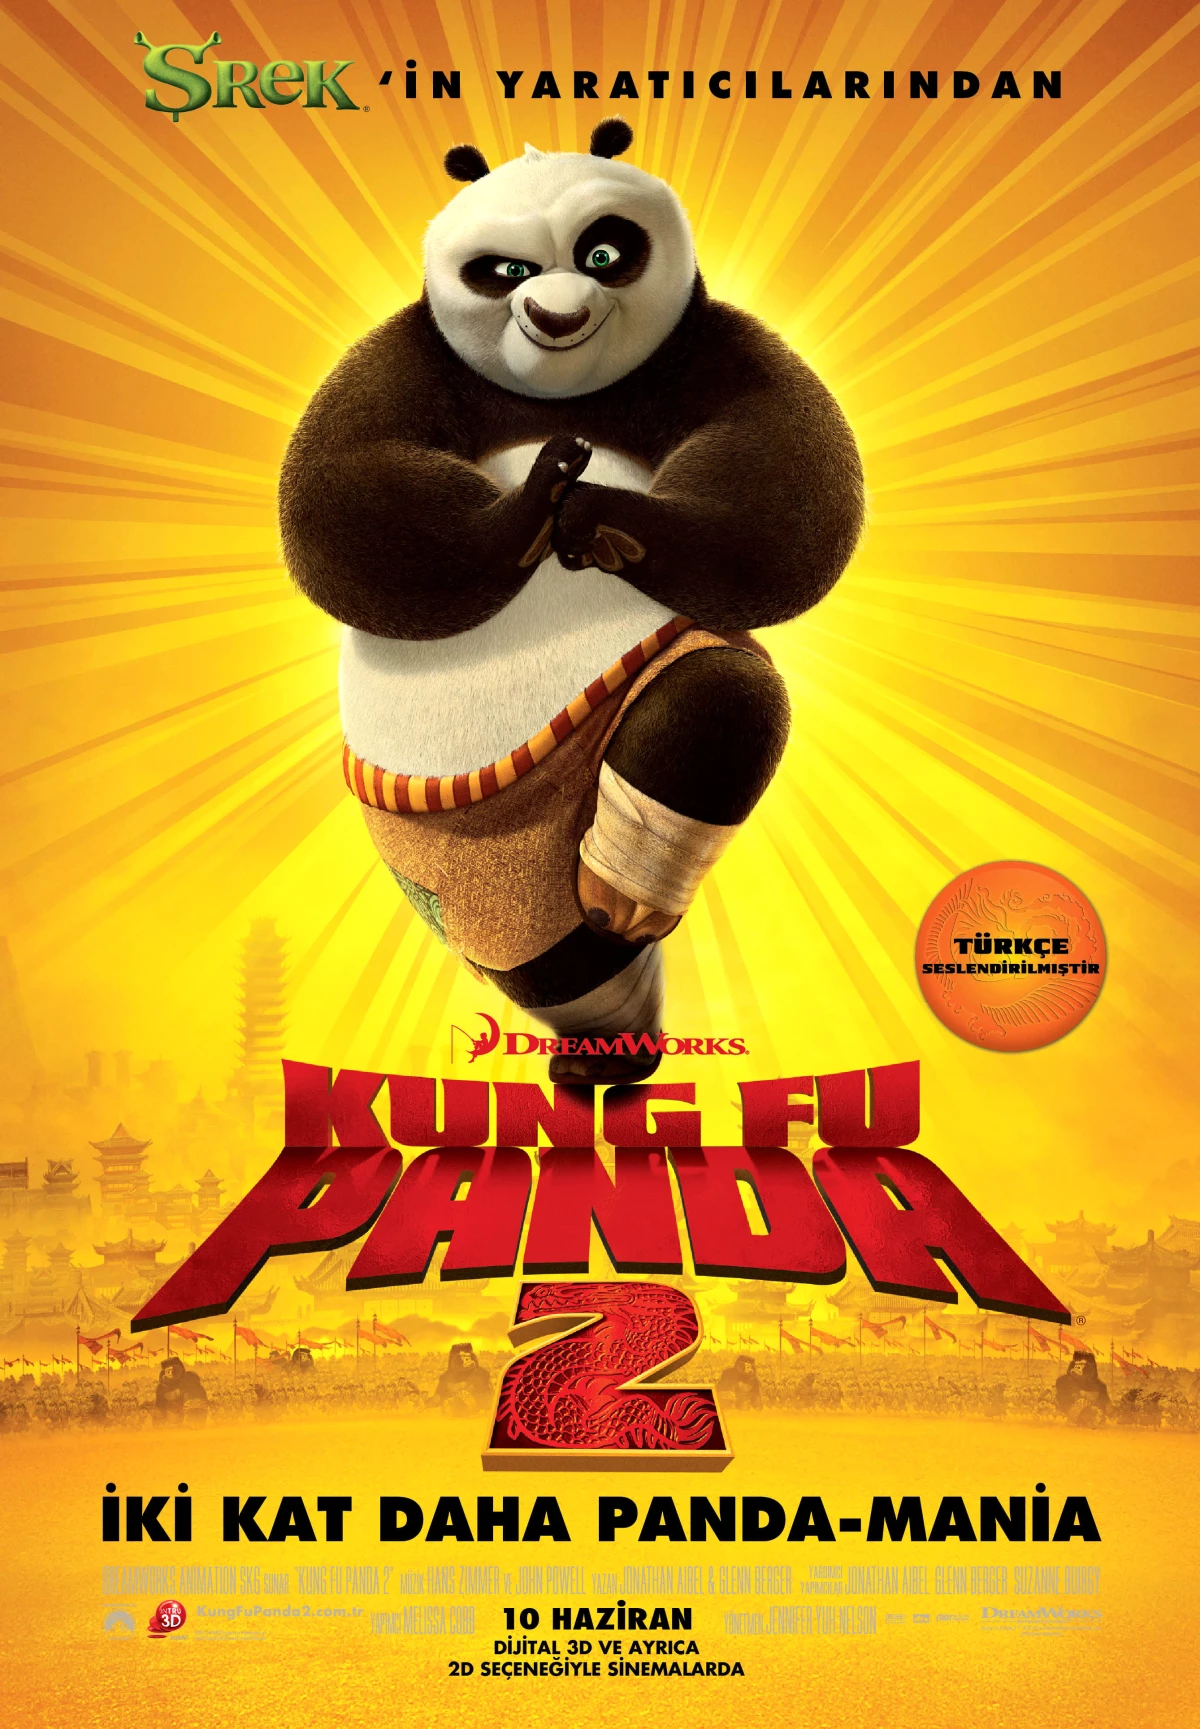 Kung Fu Panda 2 Prodüksiyon Notlari

